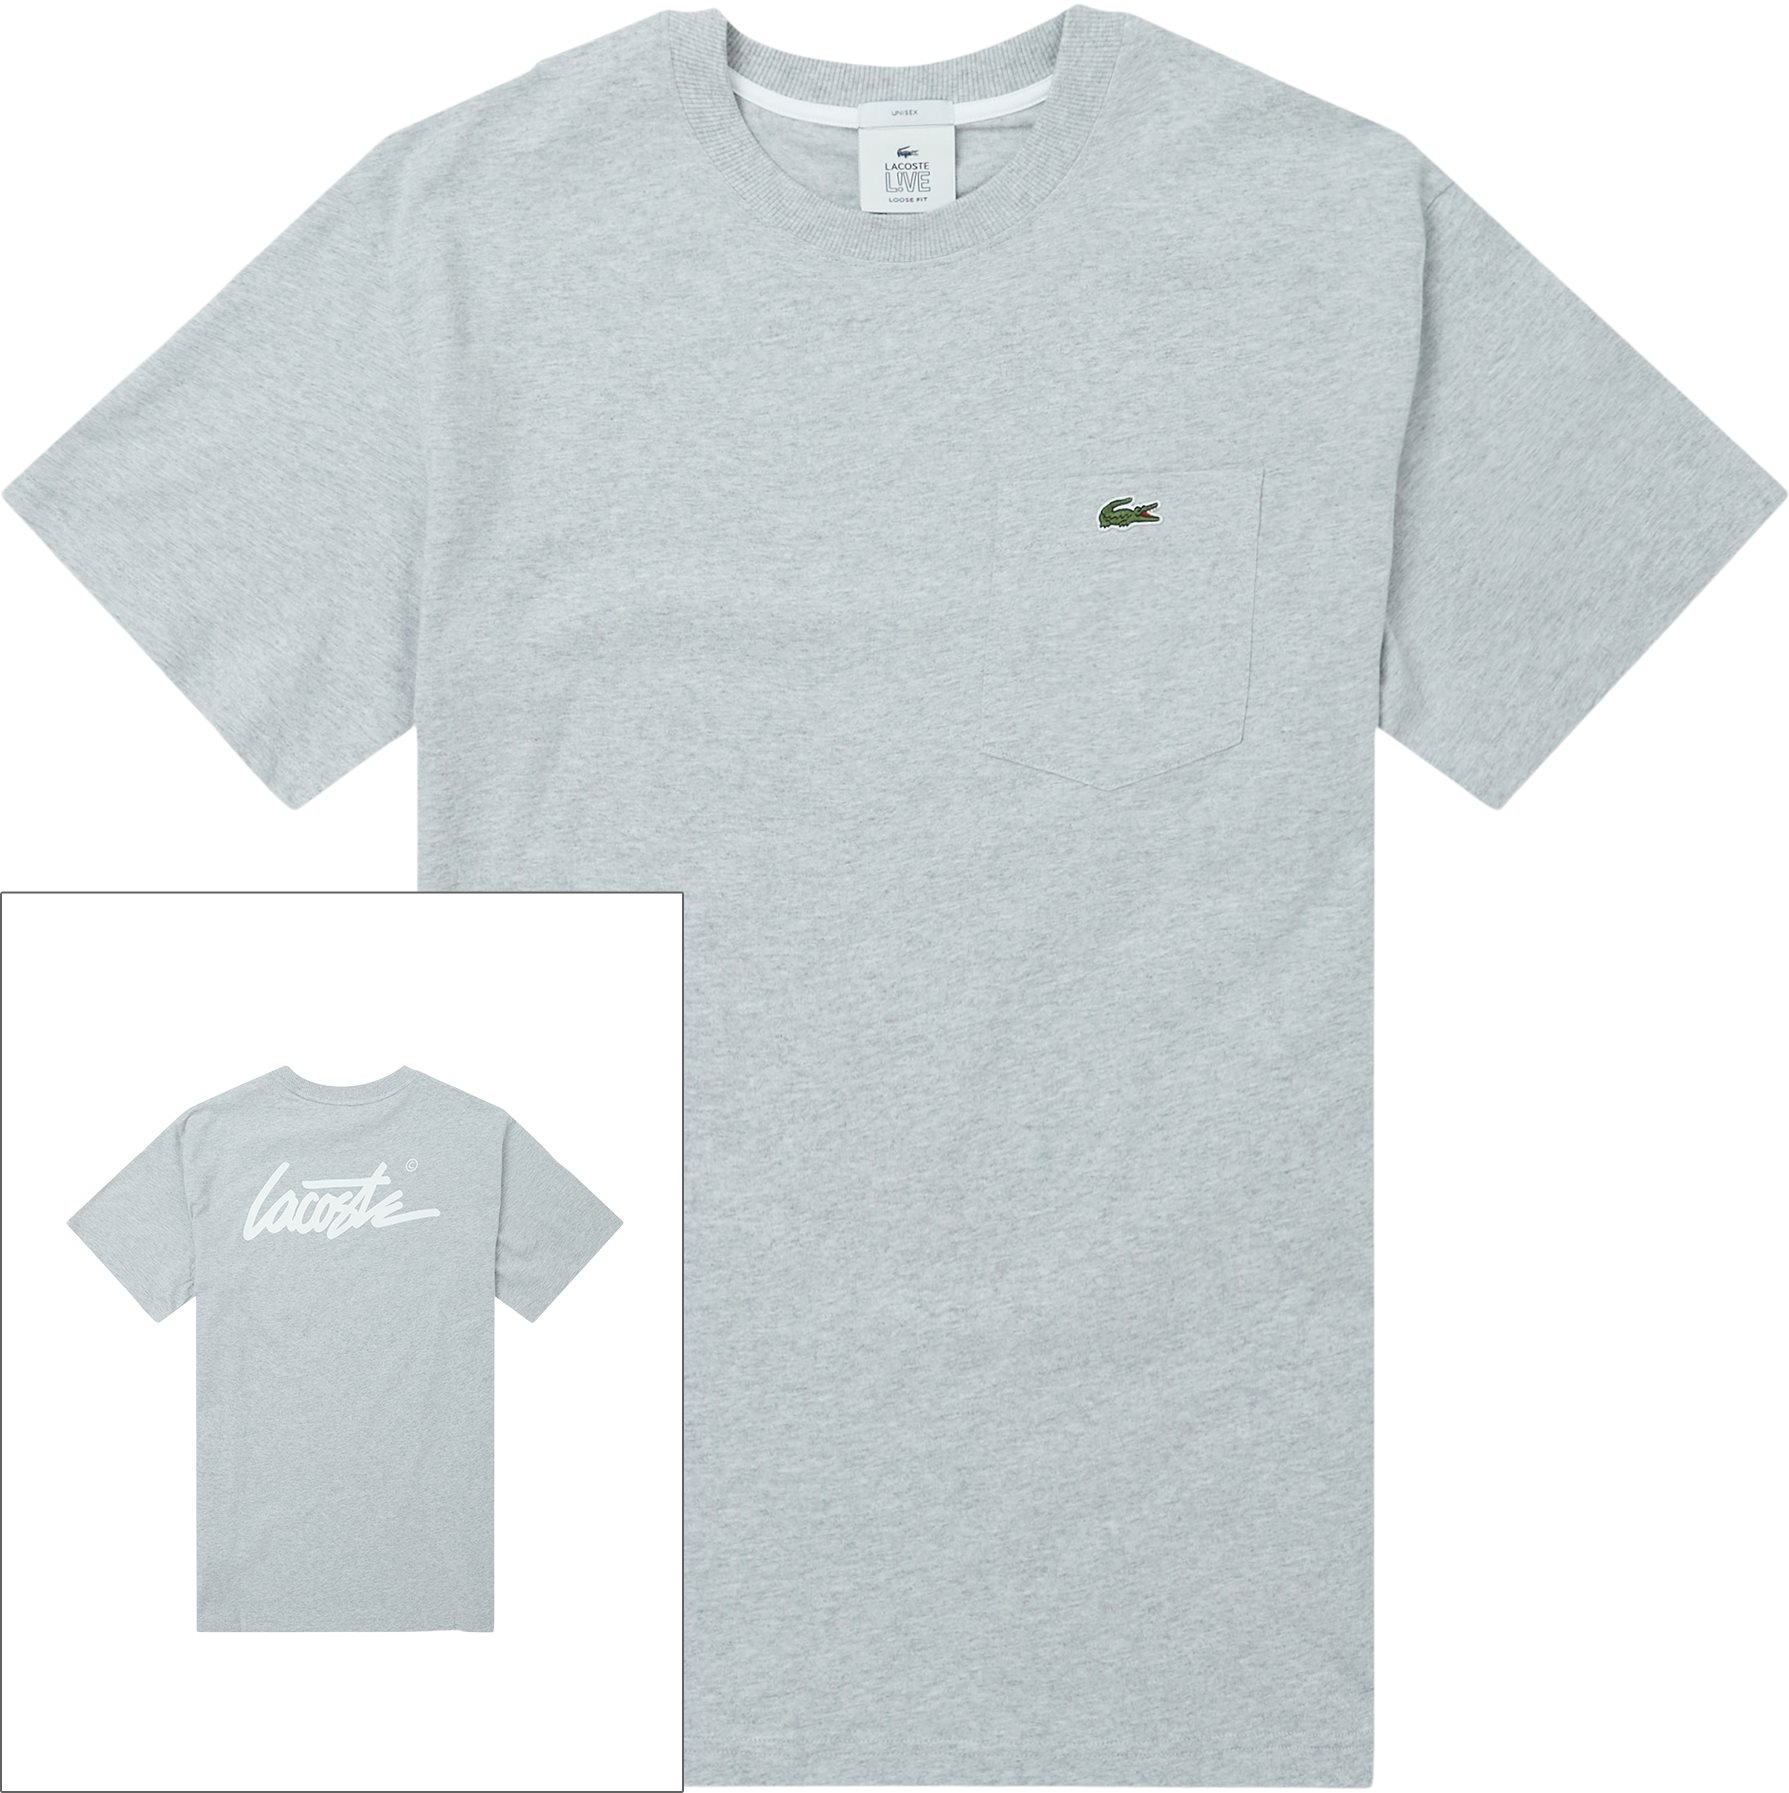 Th2748 Tee - T-shirts - Regular fit - Grey